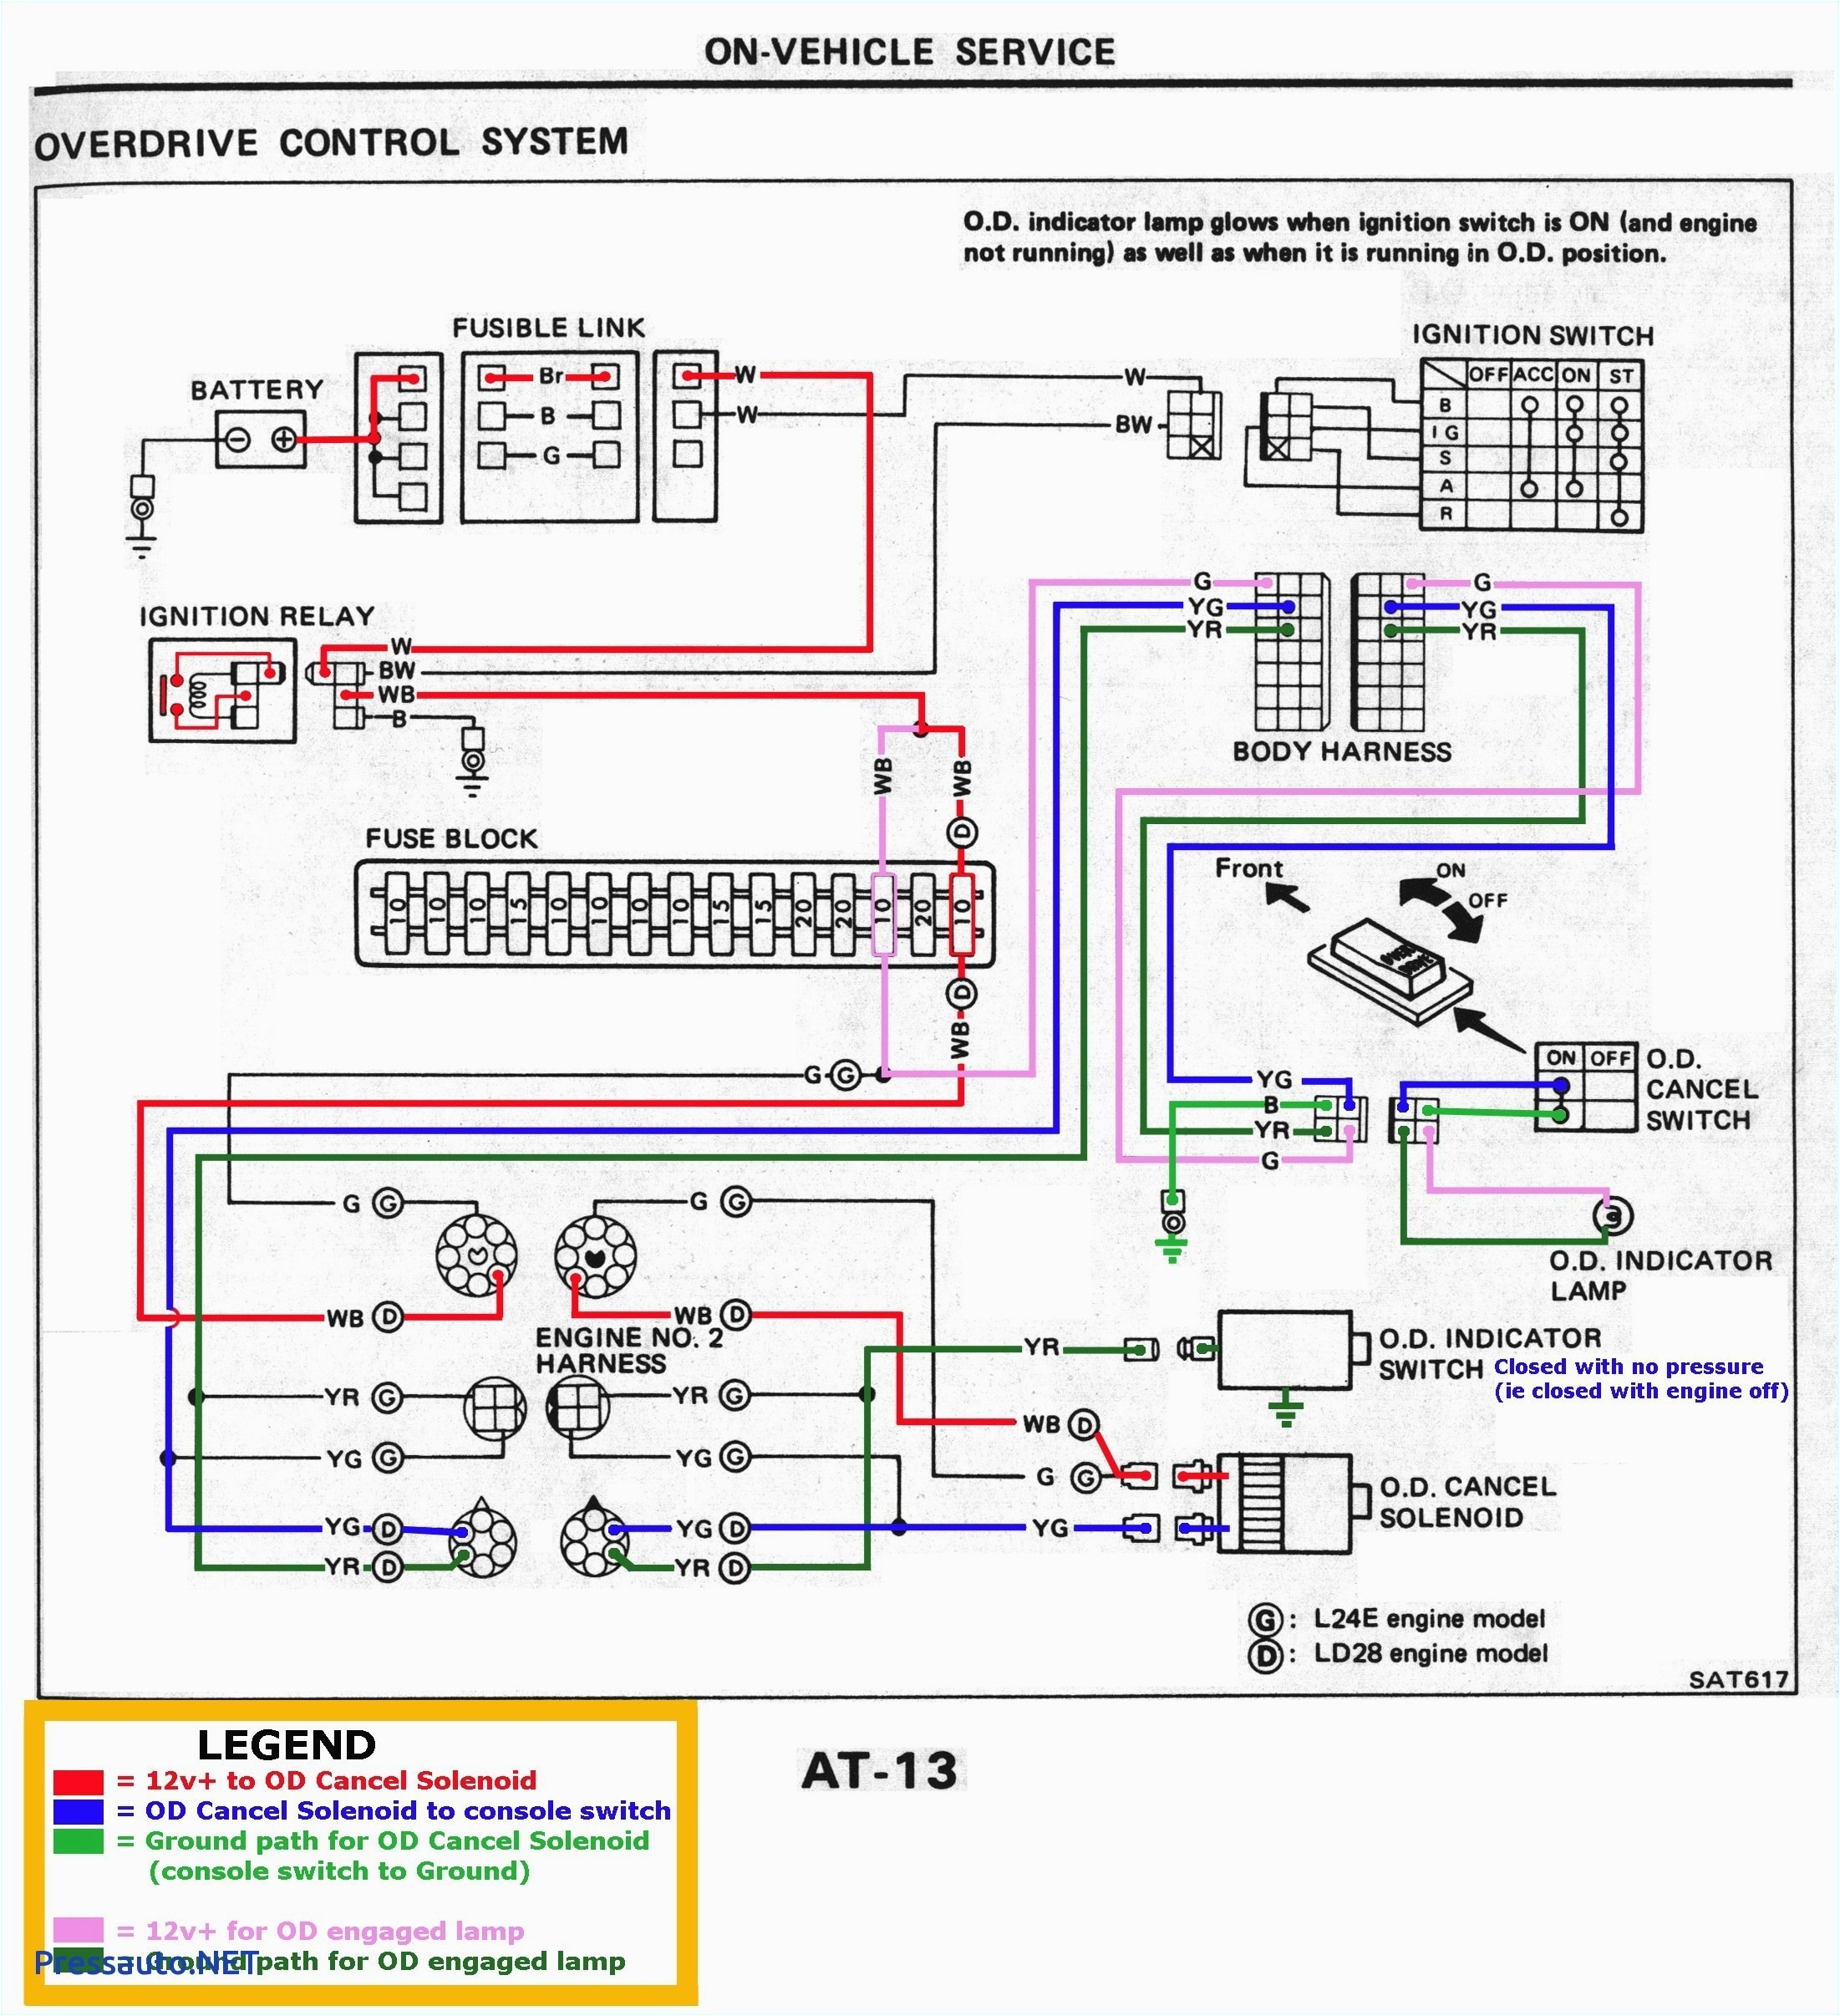 Crank Telephone Wiring Diagram Wiring Diagram 1999 ford Taurus Bcm Get Free Image About Wiring